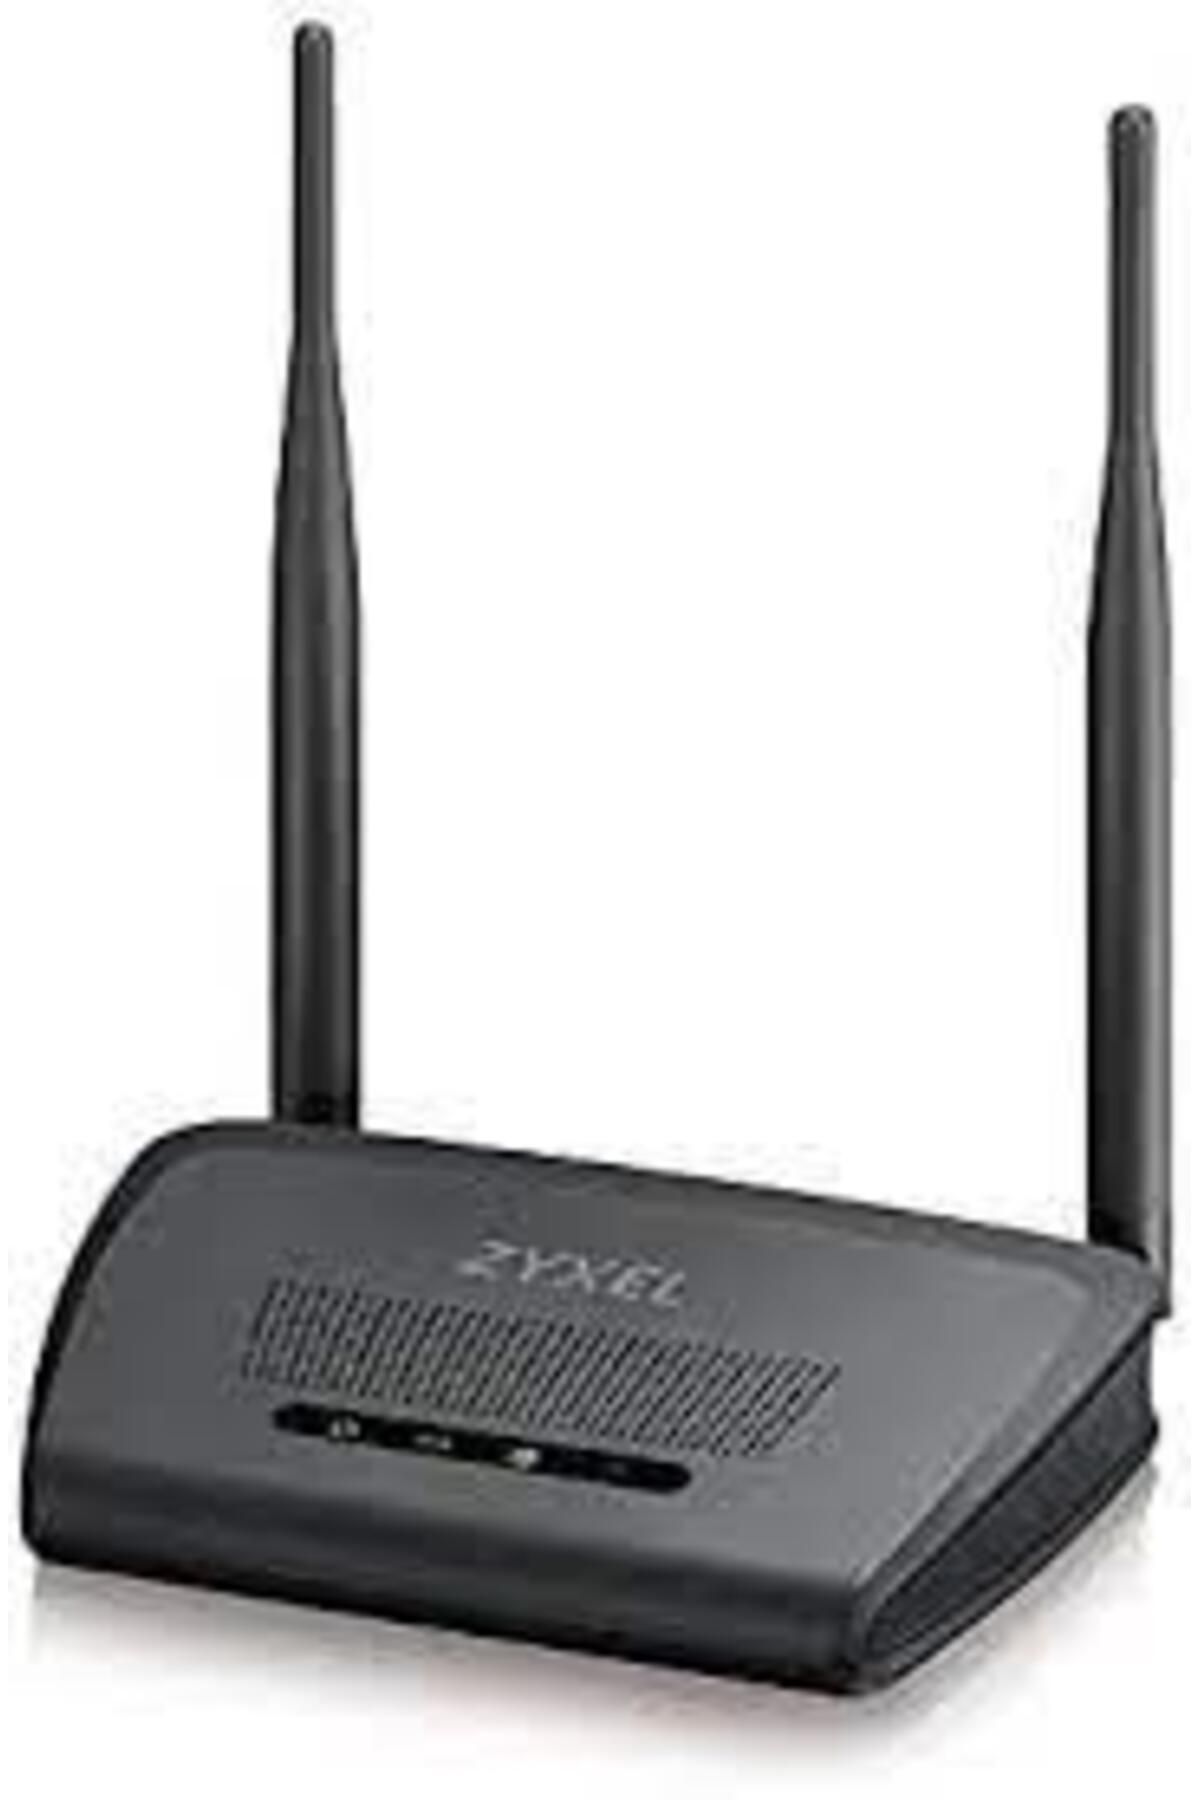 Zyxel Nbg-418n V2 300mbps 4 Port Access Point 5db